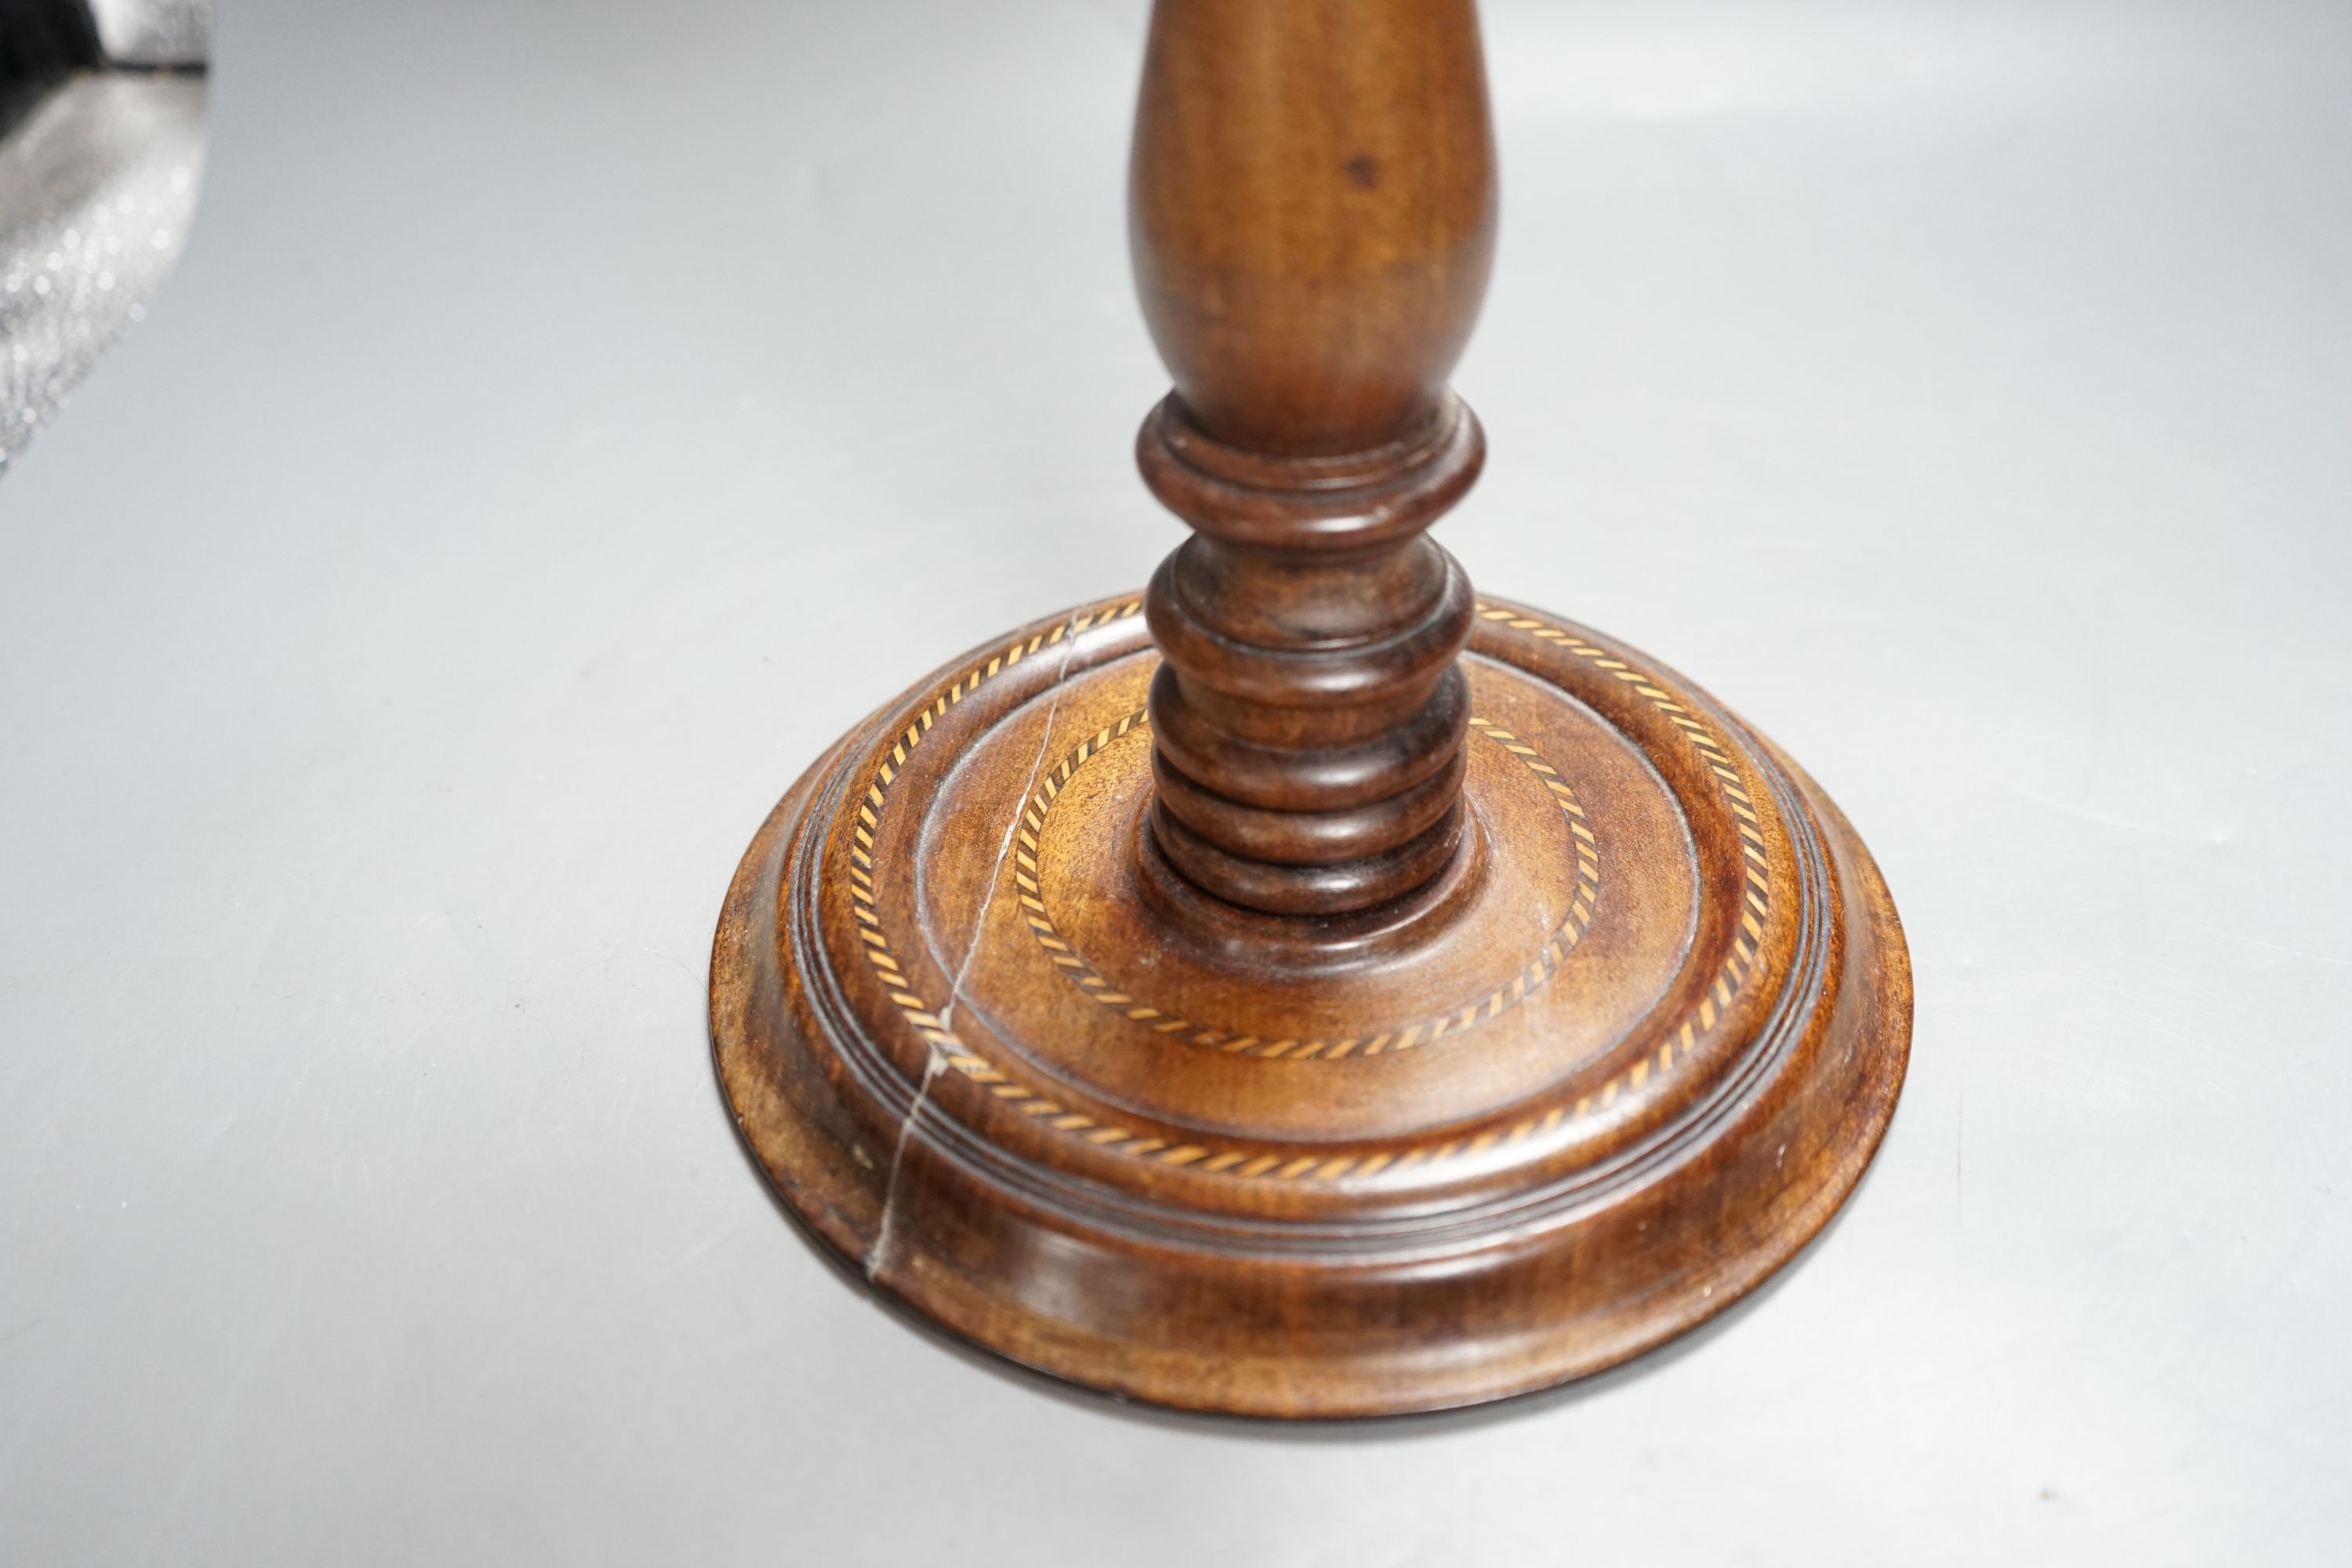 A George III inlaid mahogany zograscope, 62cm